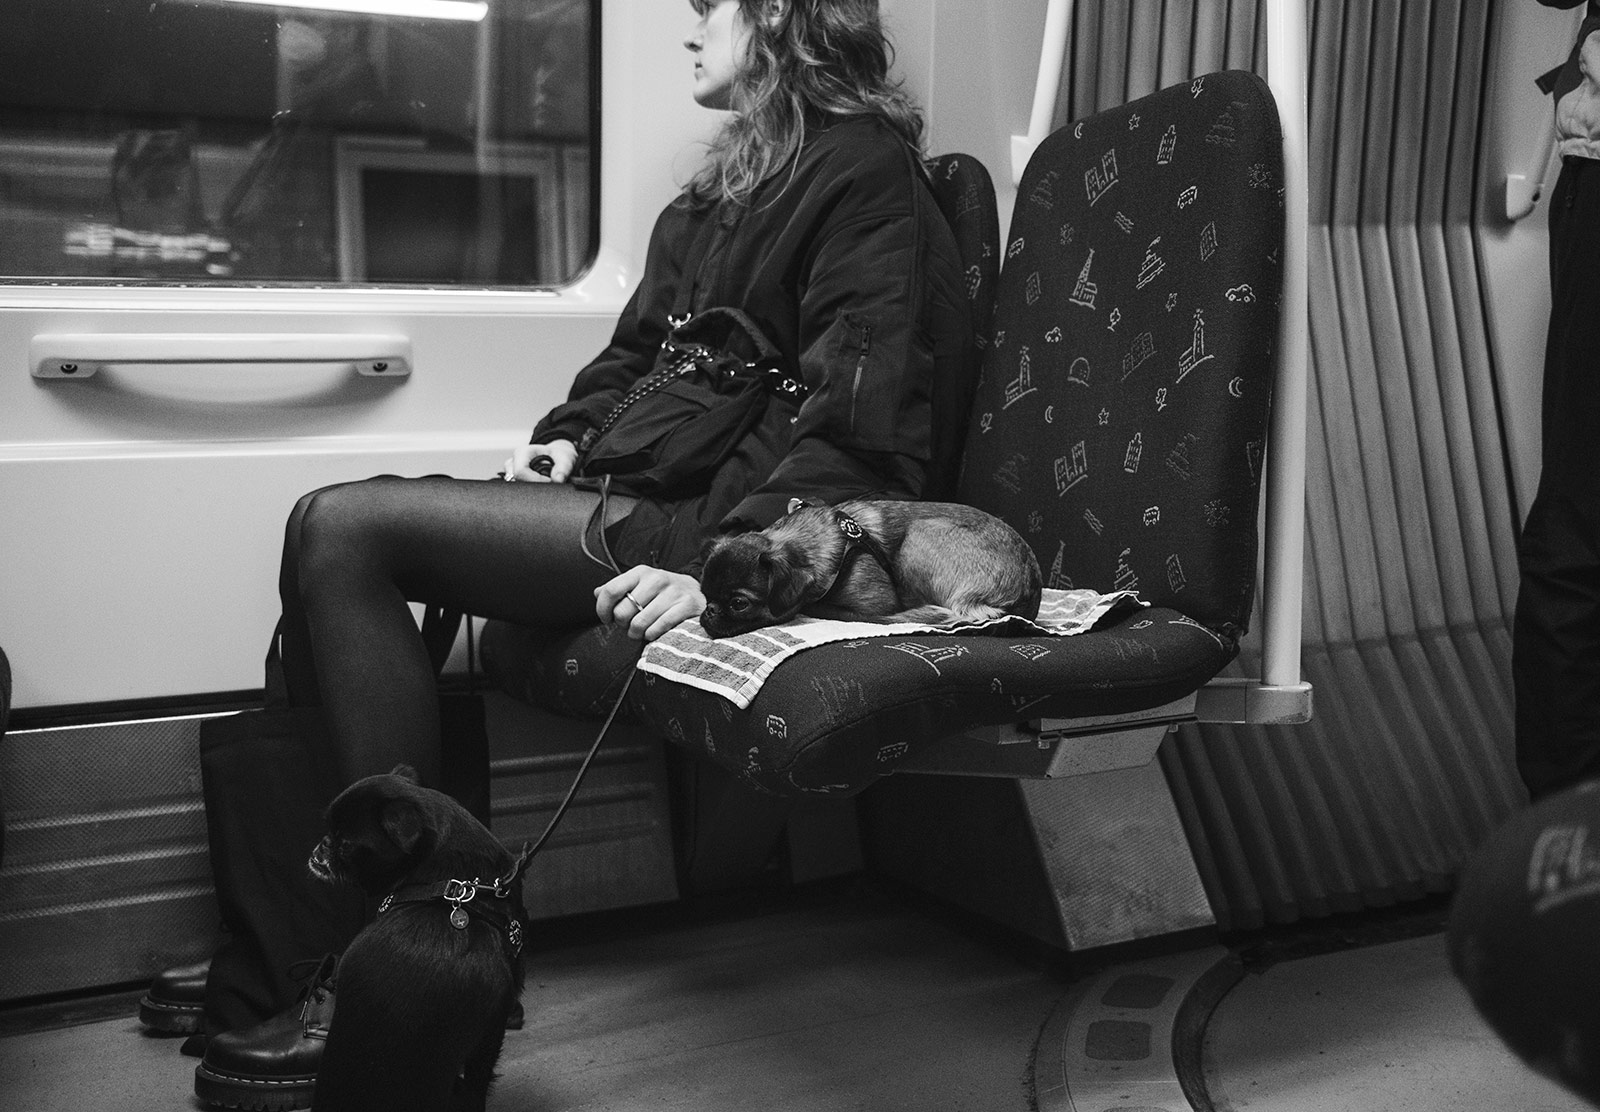 Dog sat on train seat